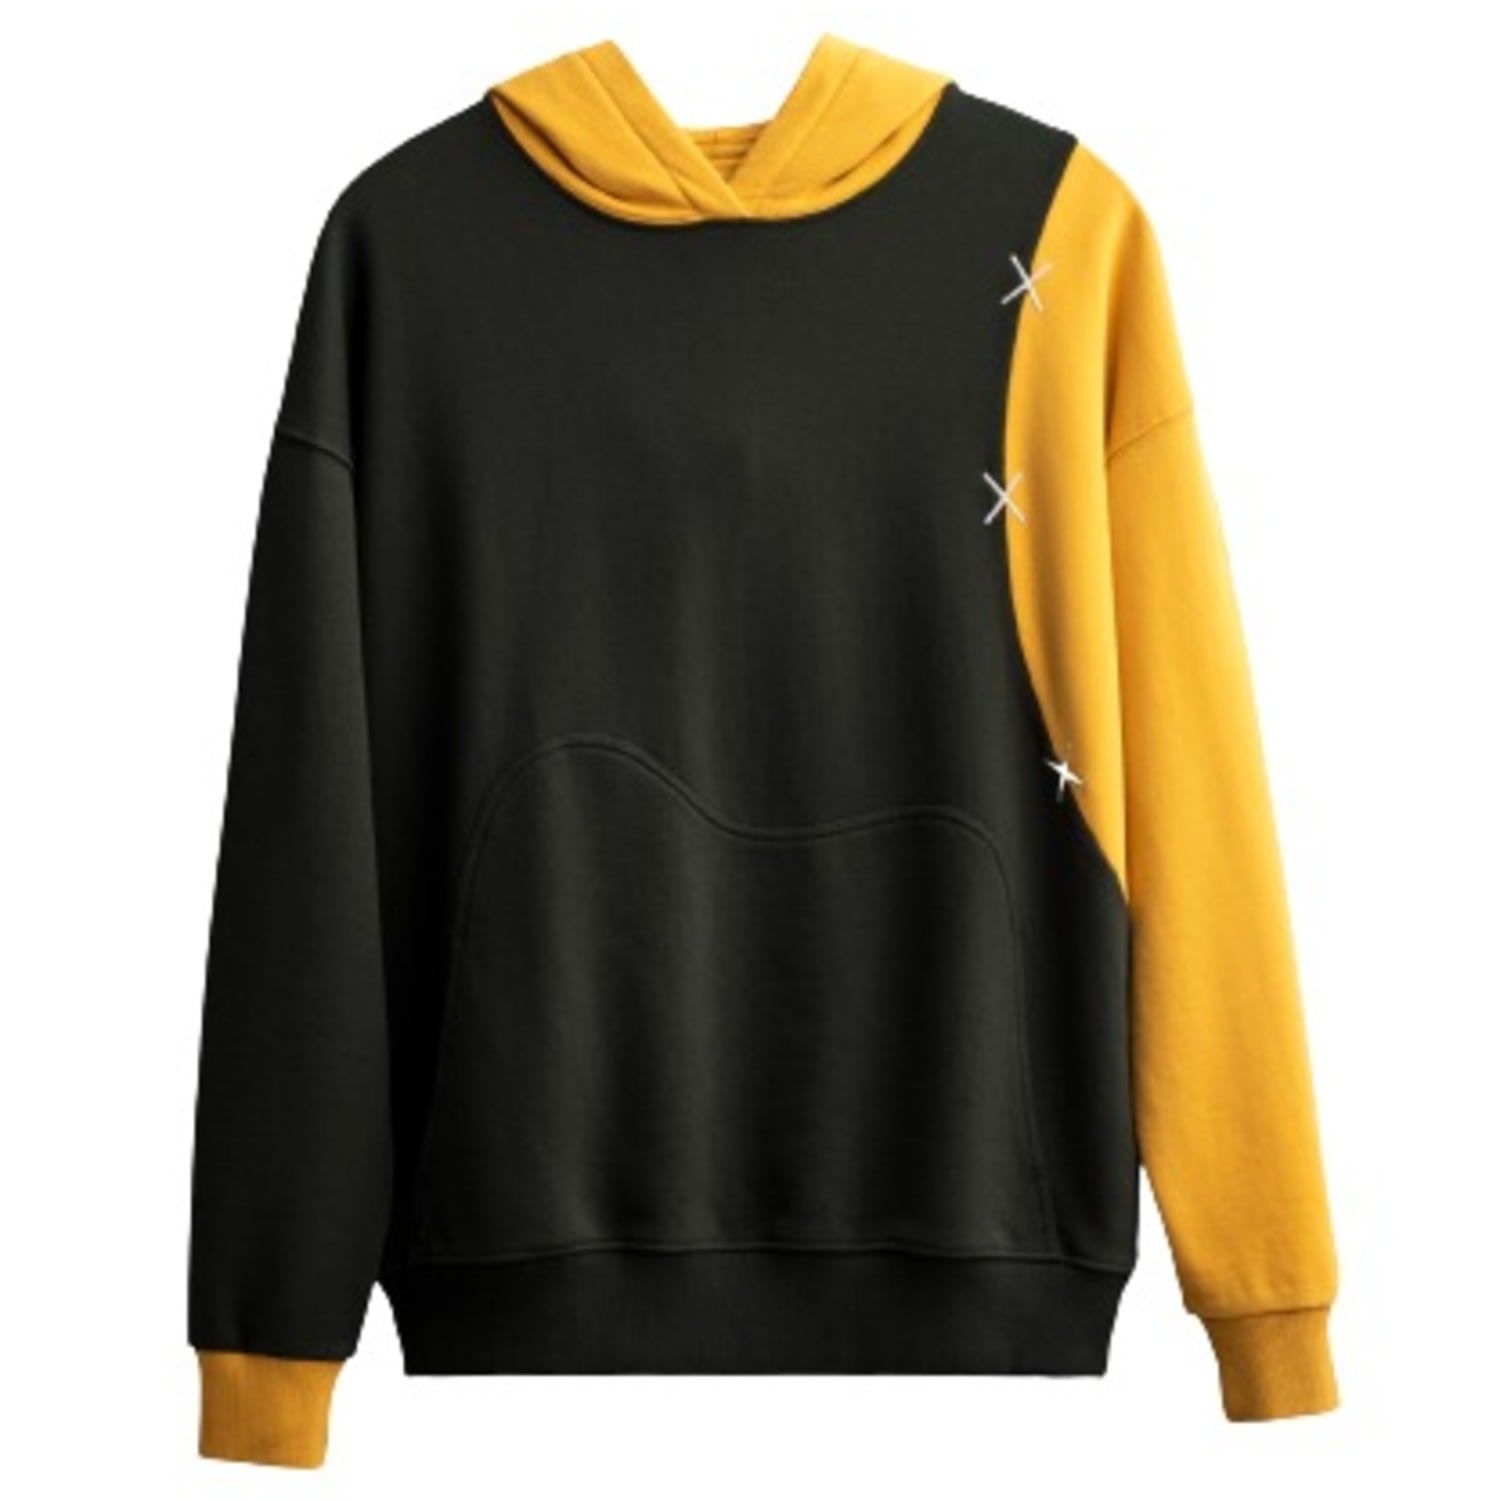 Men's Black Unisex Design Hoodie Sweatshirt - Oileka - Asphalt Extra Small KAFT